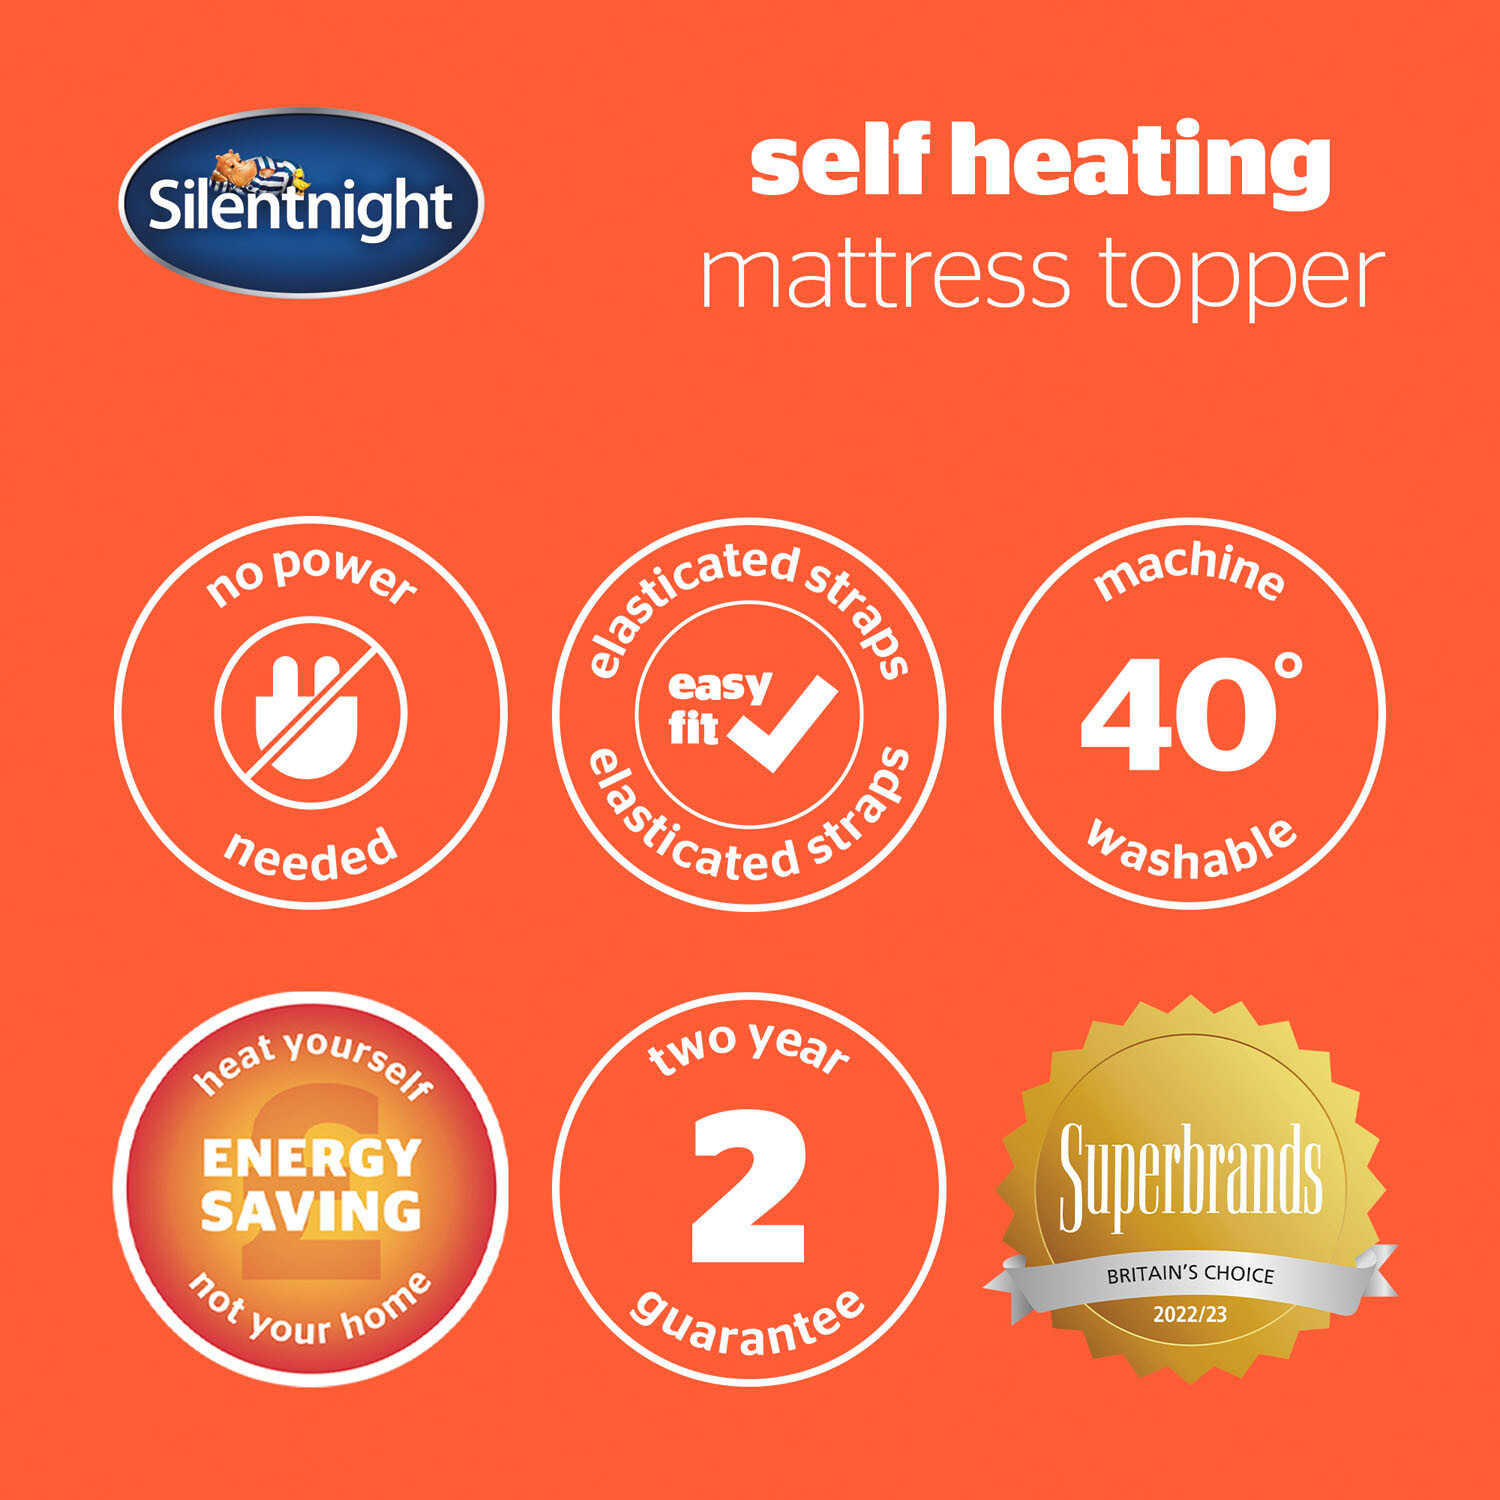 Silentnight Self Heating Mattress Topper Image 8